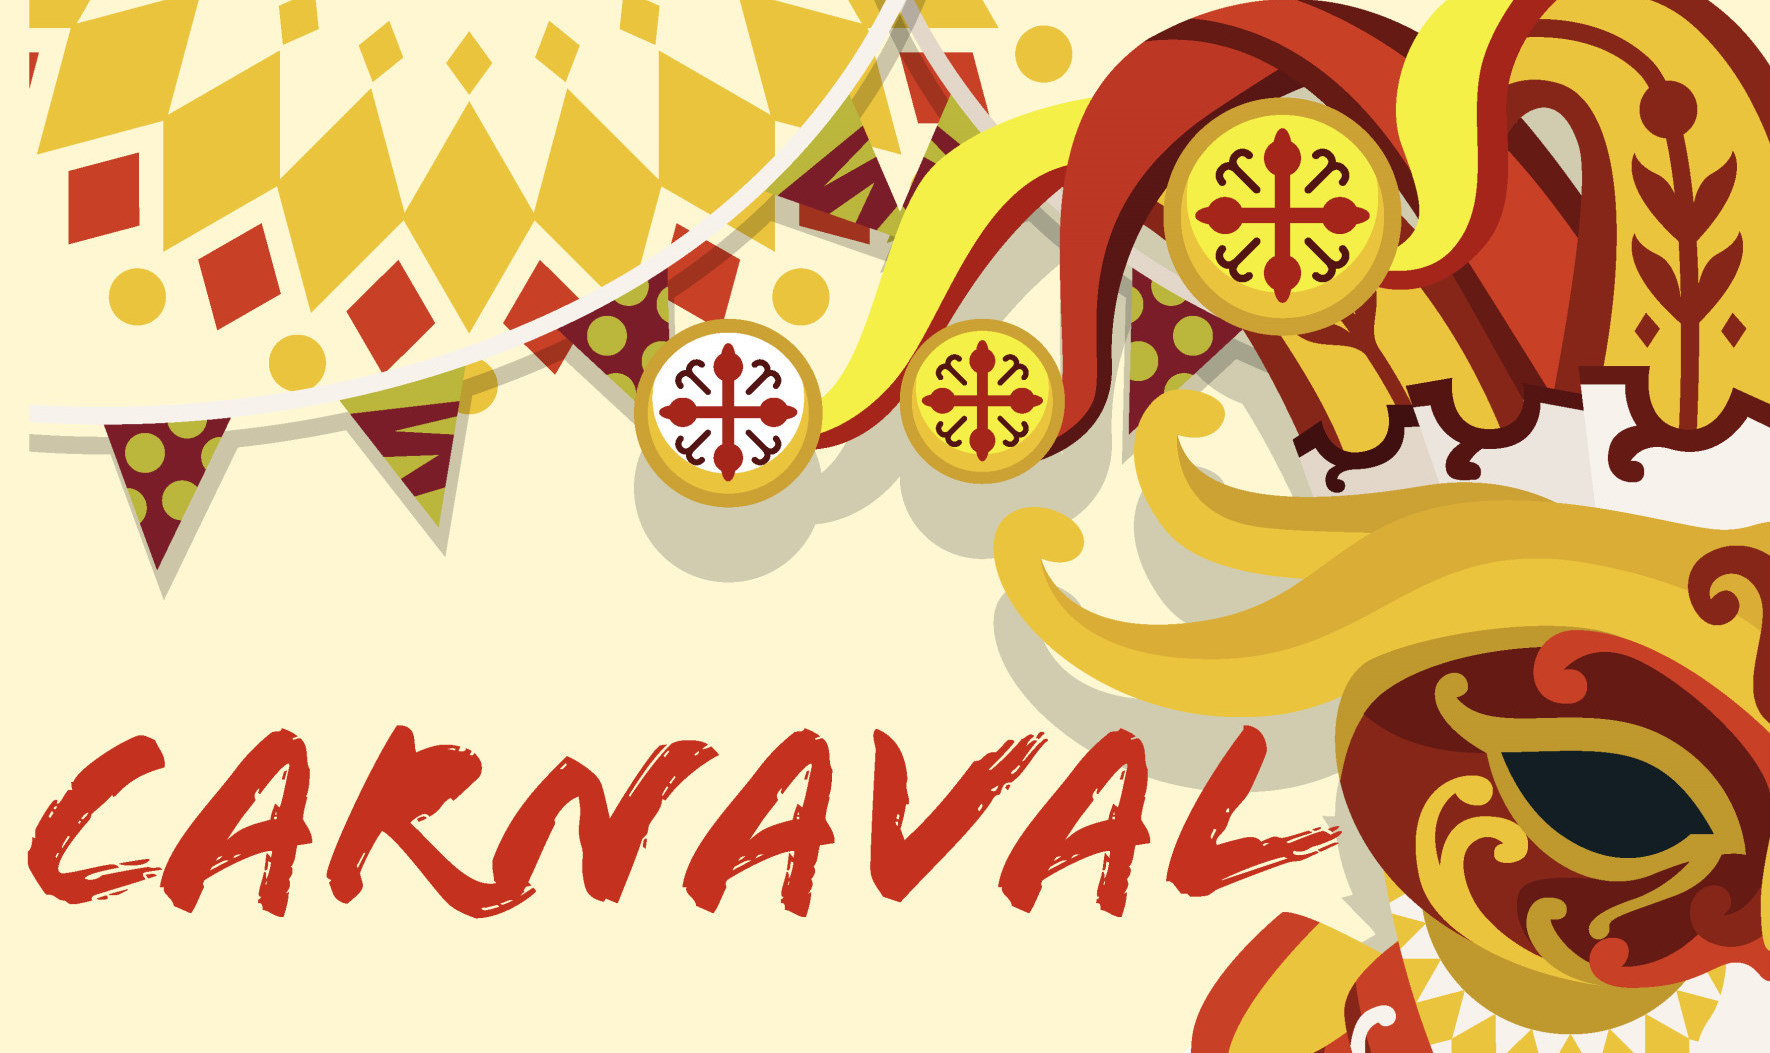 Carnaval el diumenge 11 de febrer